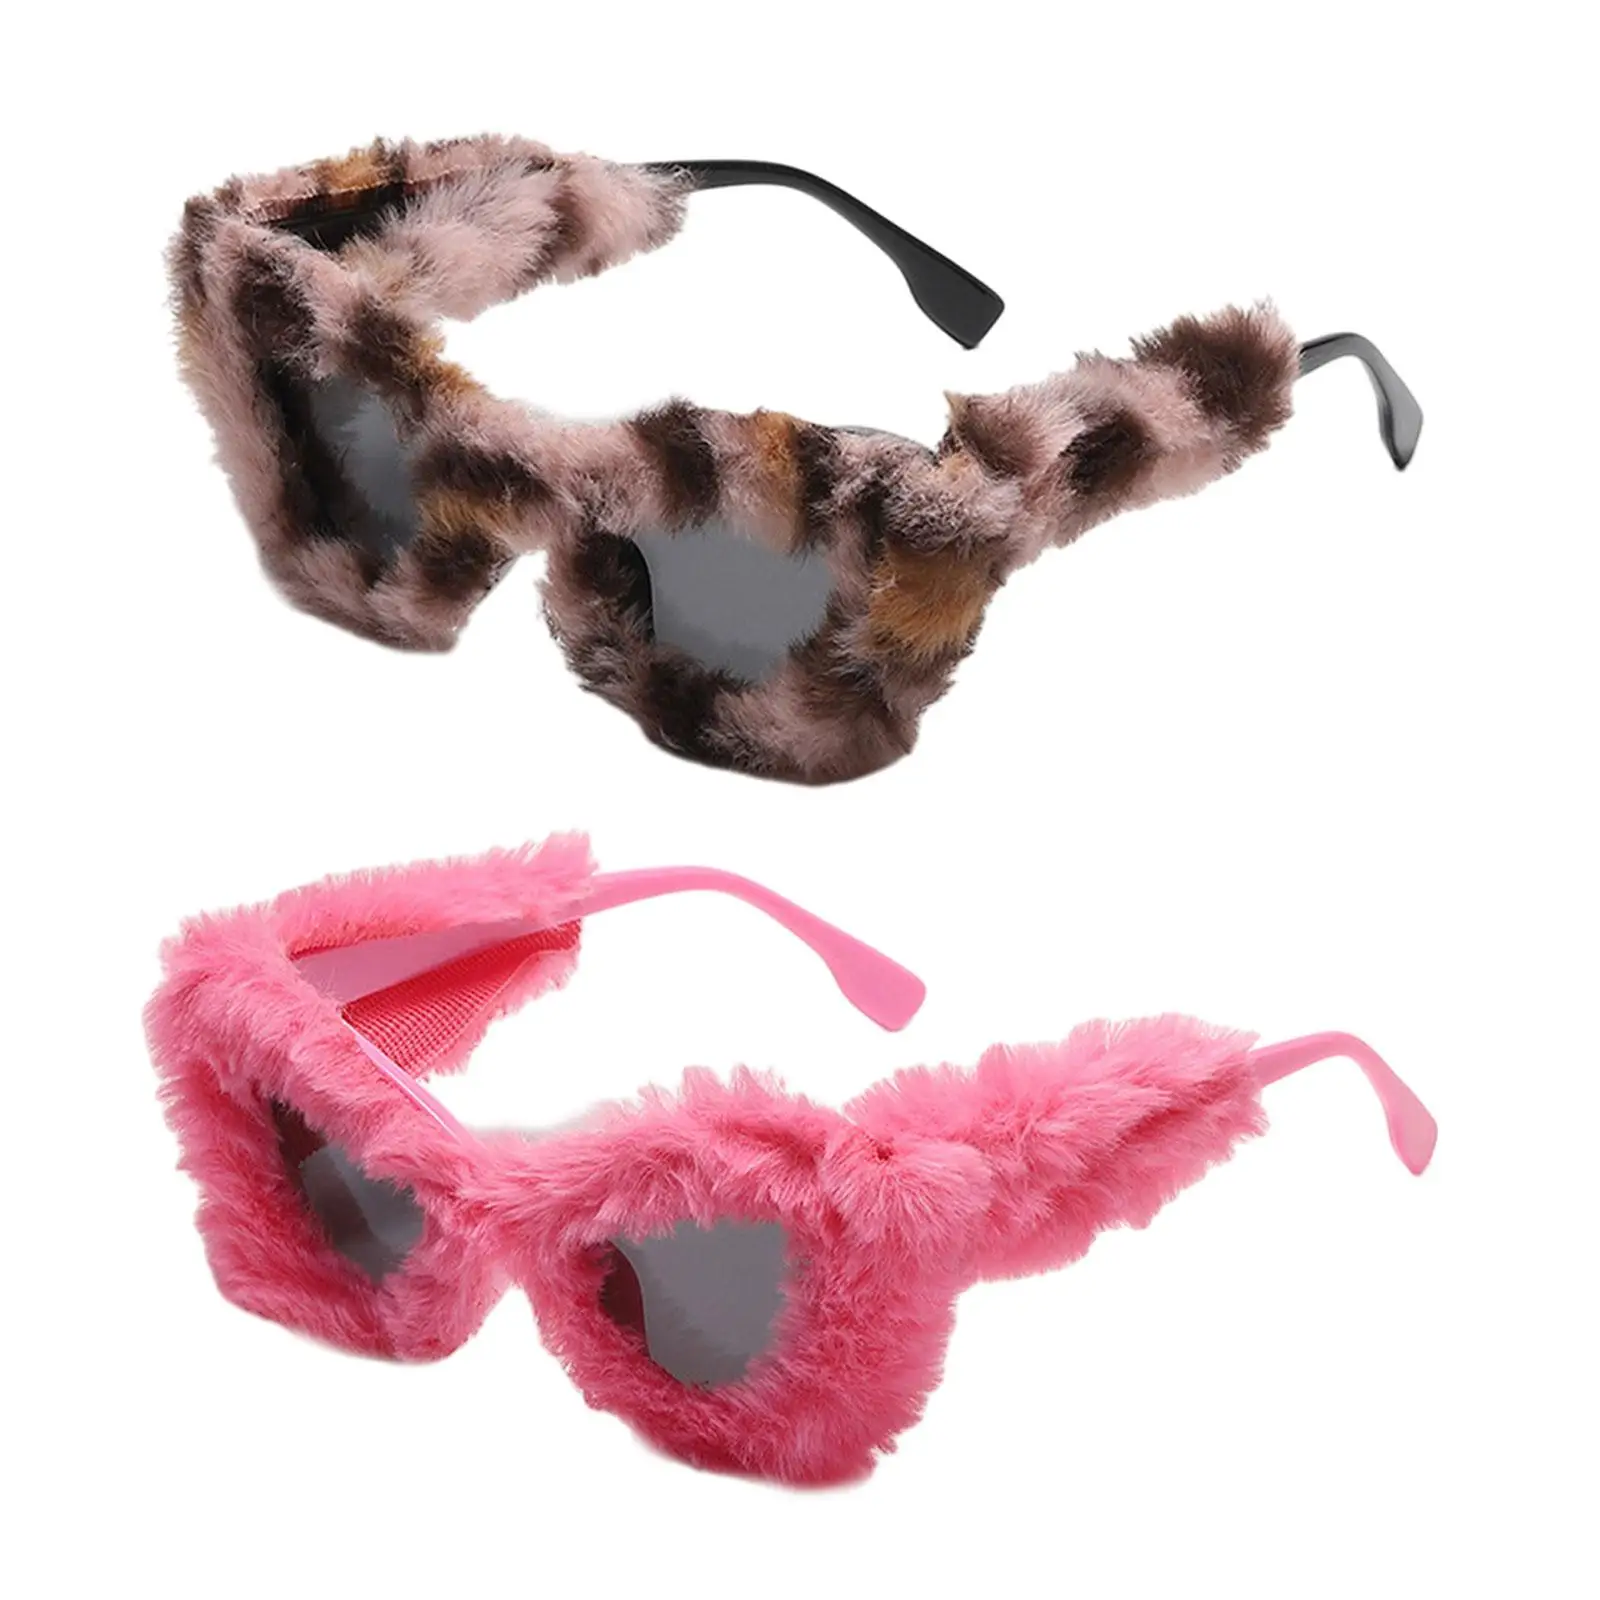 Plush Fuzzy Sunglasses Soft Eyewear Creative Fashionable Furry Sunglasses for Travel Masquerade Holiday Photography Party